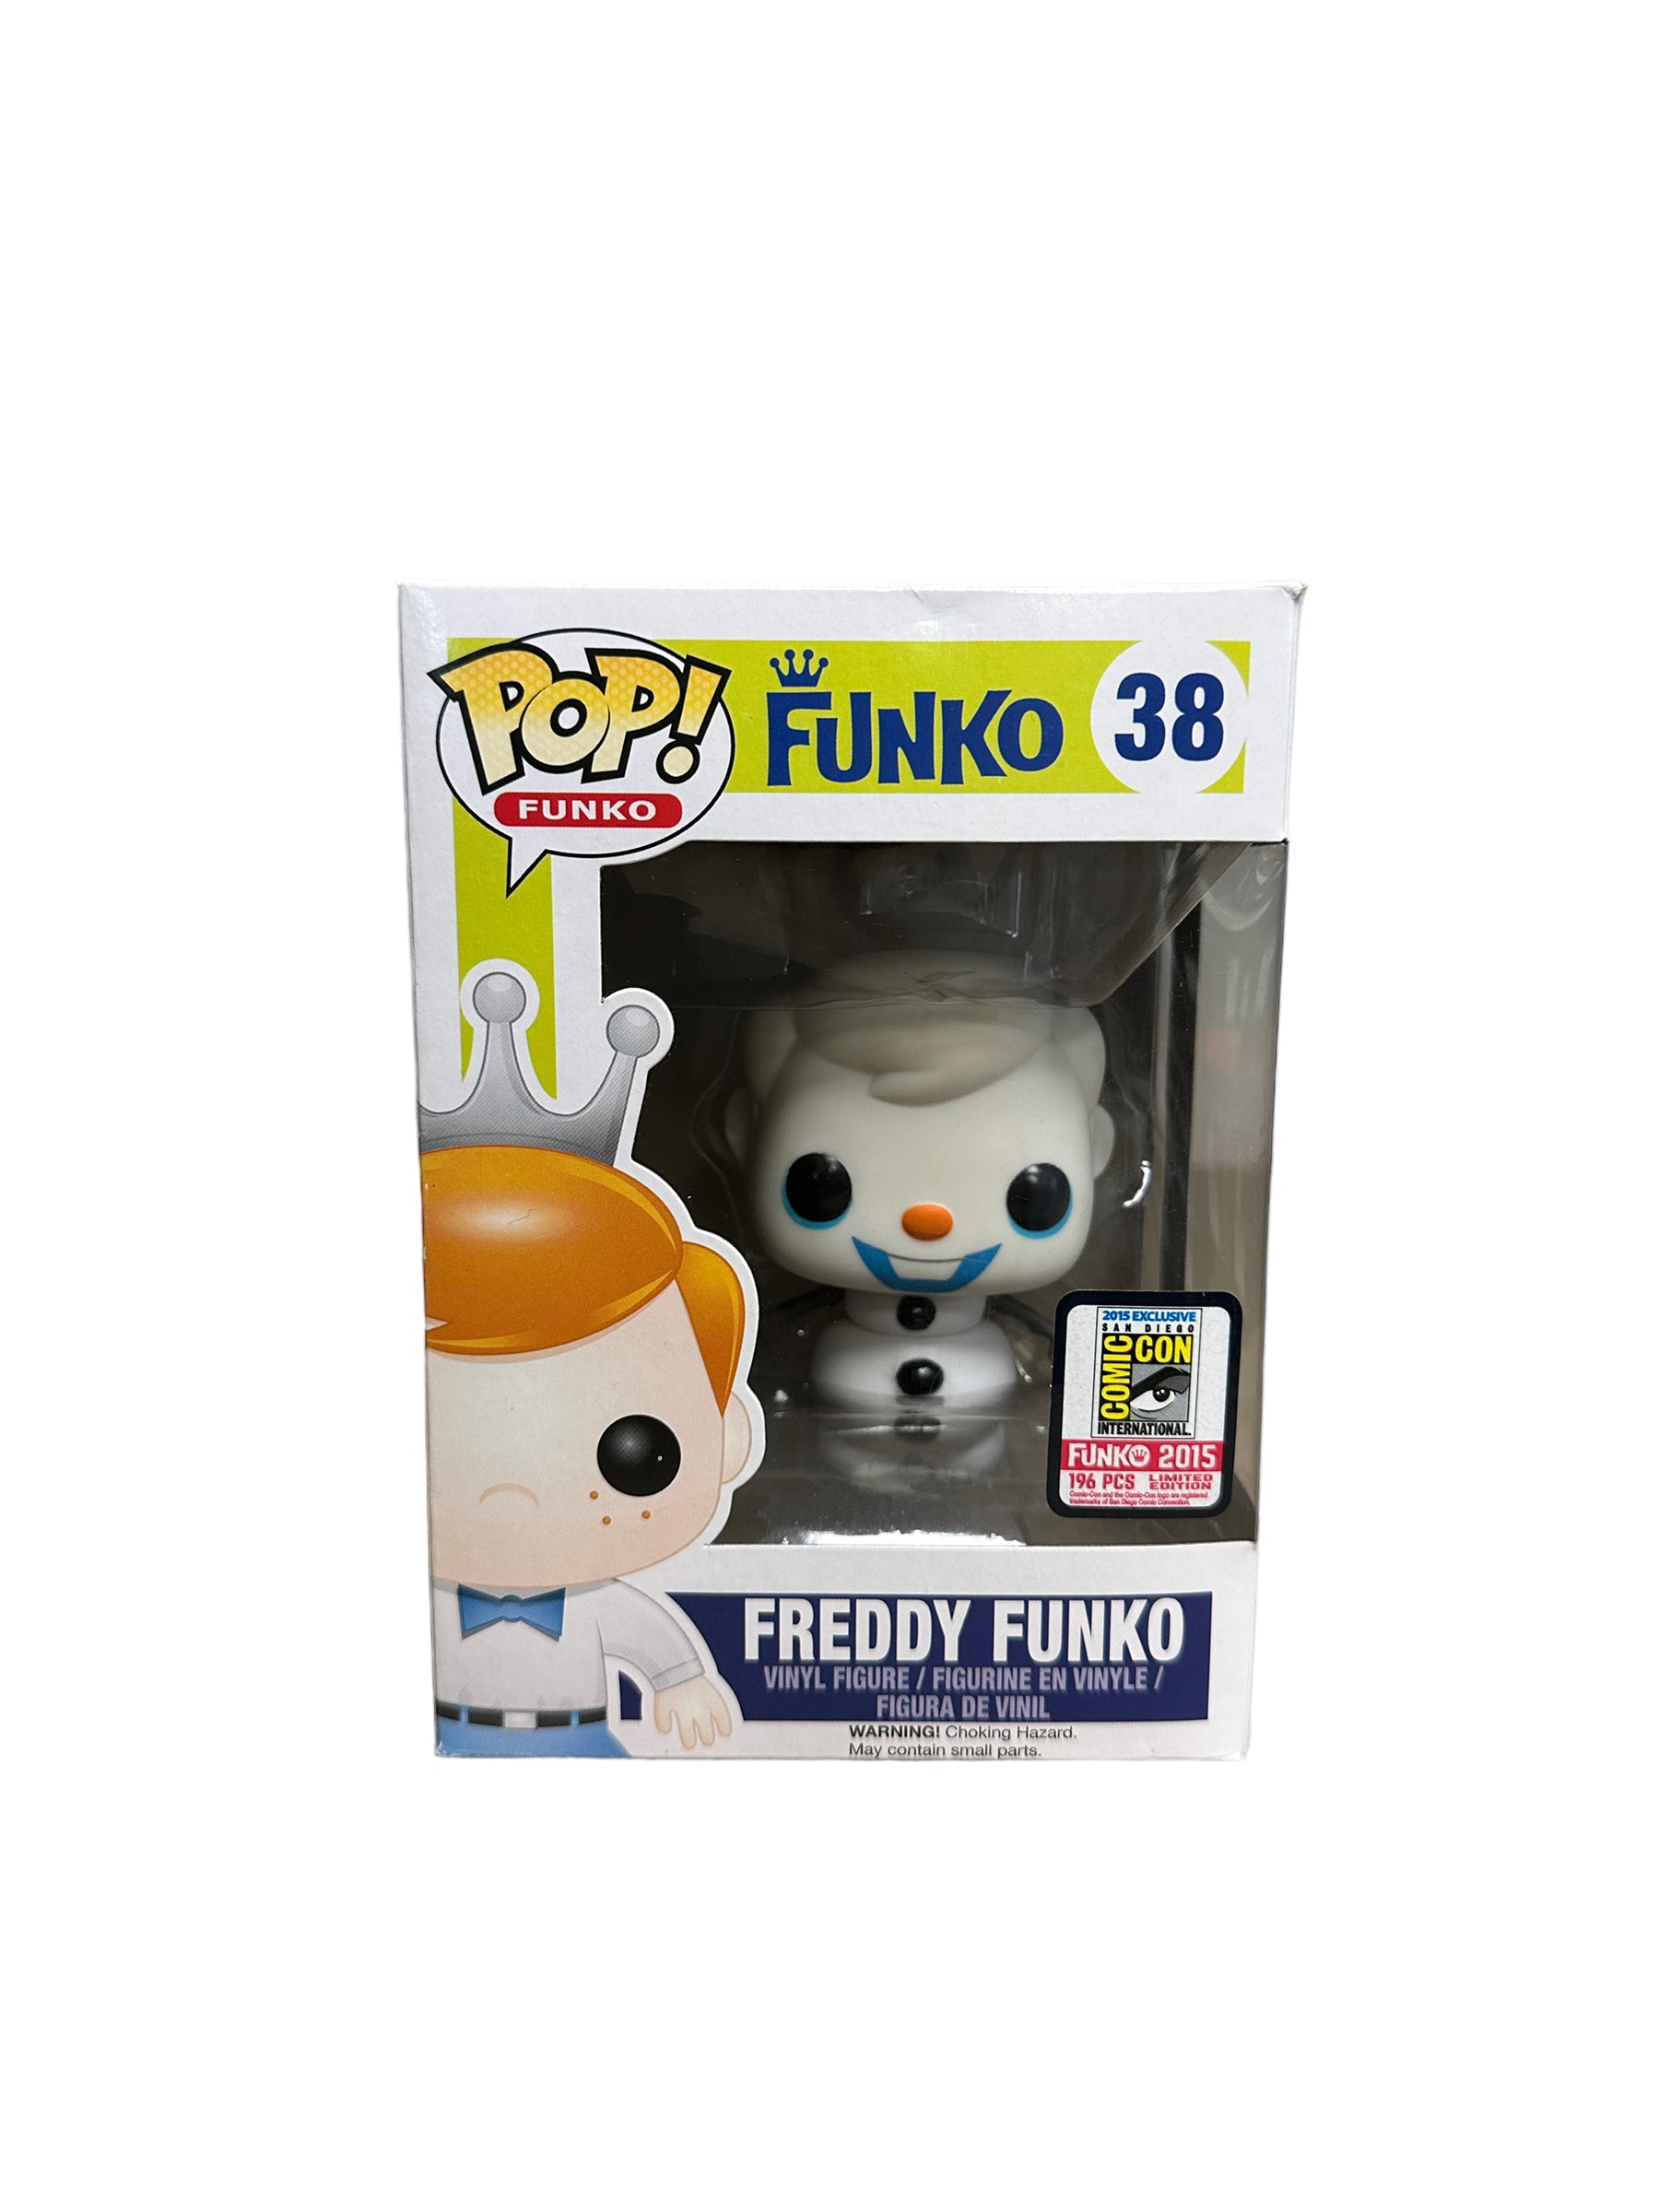 Freddy Funko as Olaf #38 Funko Pop! - SDCC 2015 Exclusive LE196 Pcs - Condition 7/10